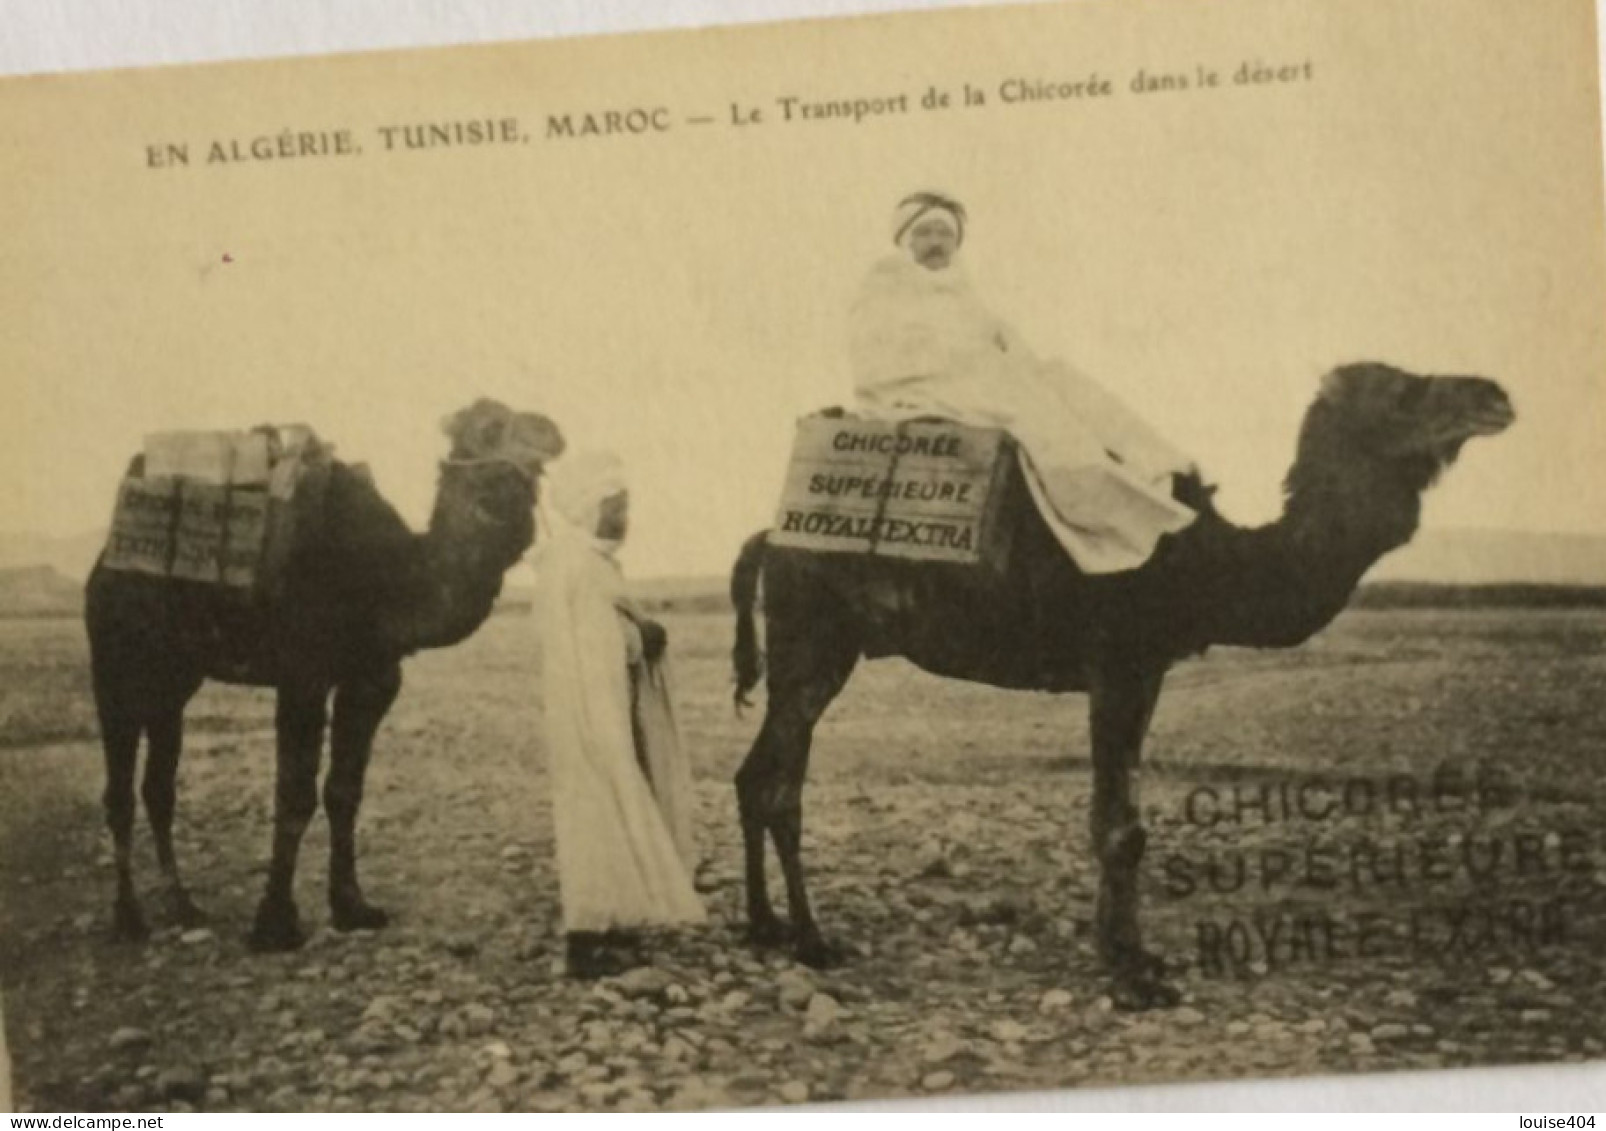 EE ALGERIE MAROC  TUNISIE TRANSPORT DE LA CHICOREE DANS LE DESERT - Profesiones